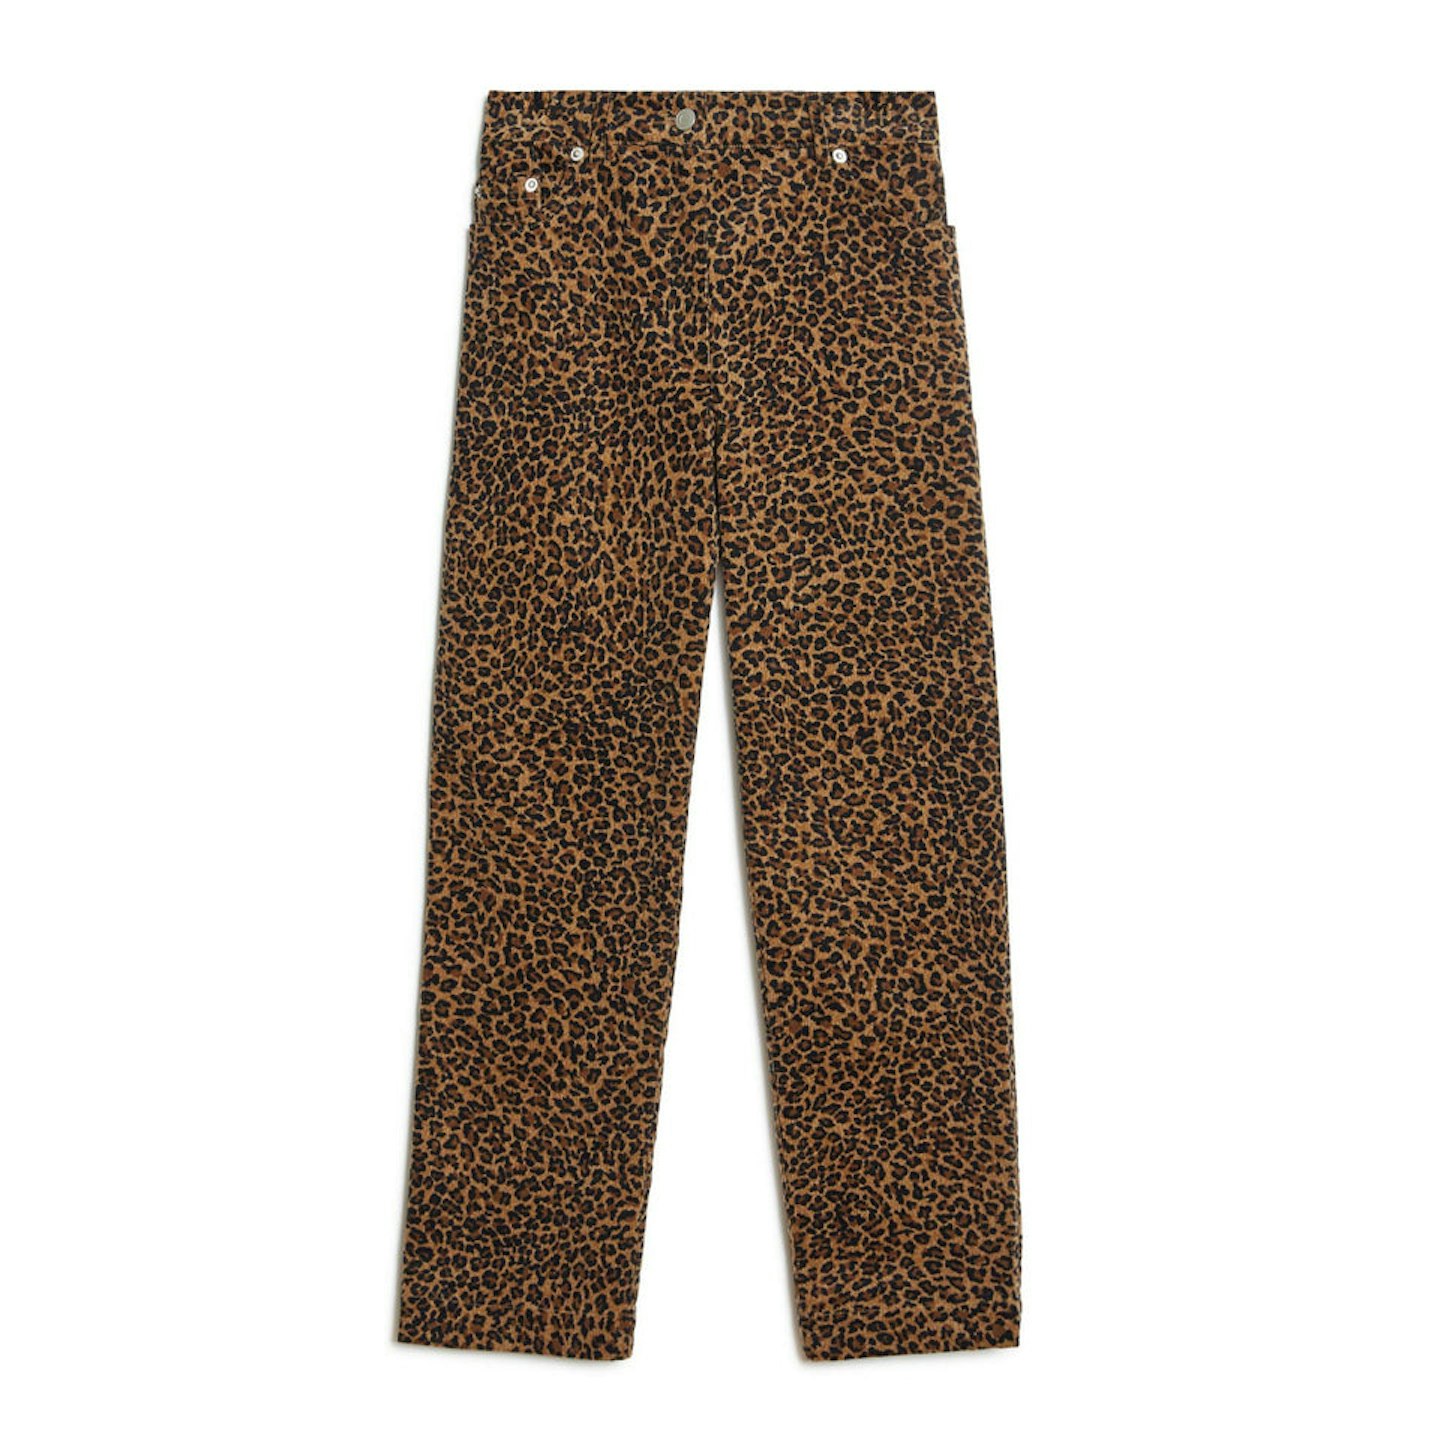 The Best Leopard-Print Jeans